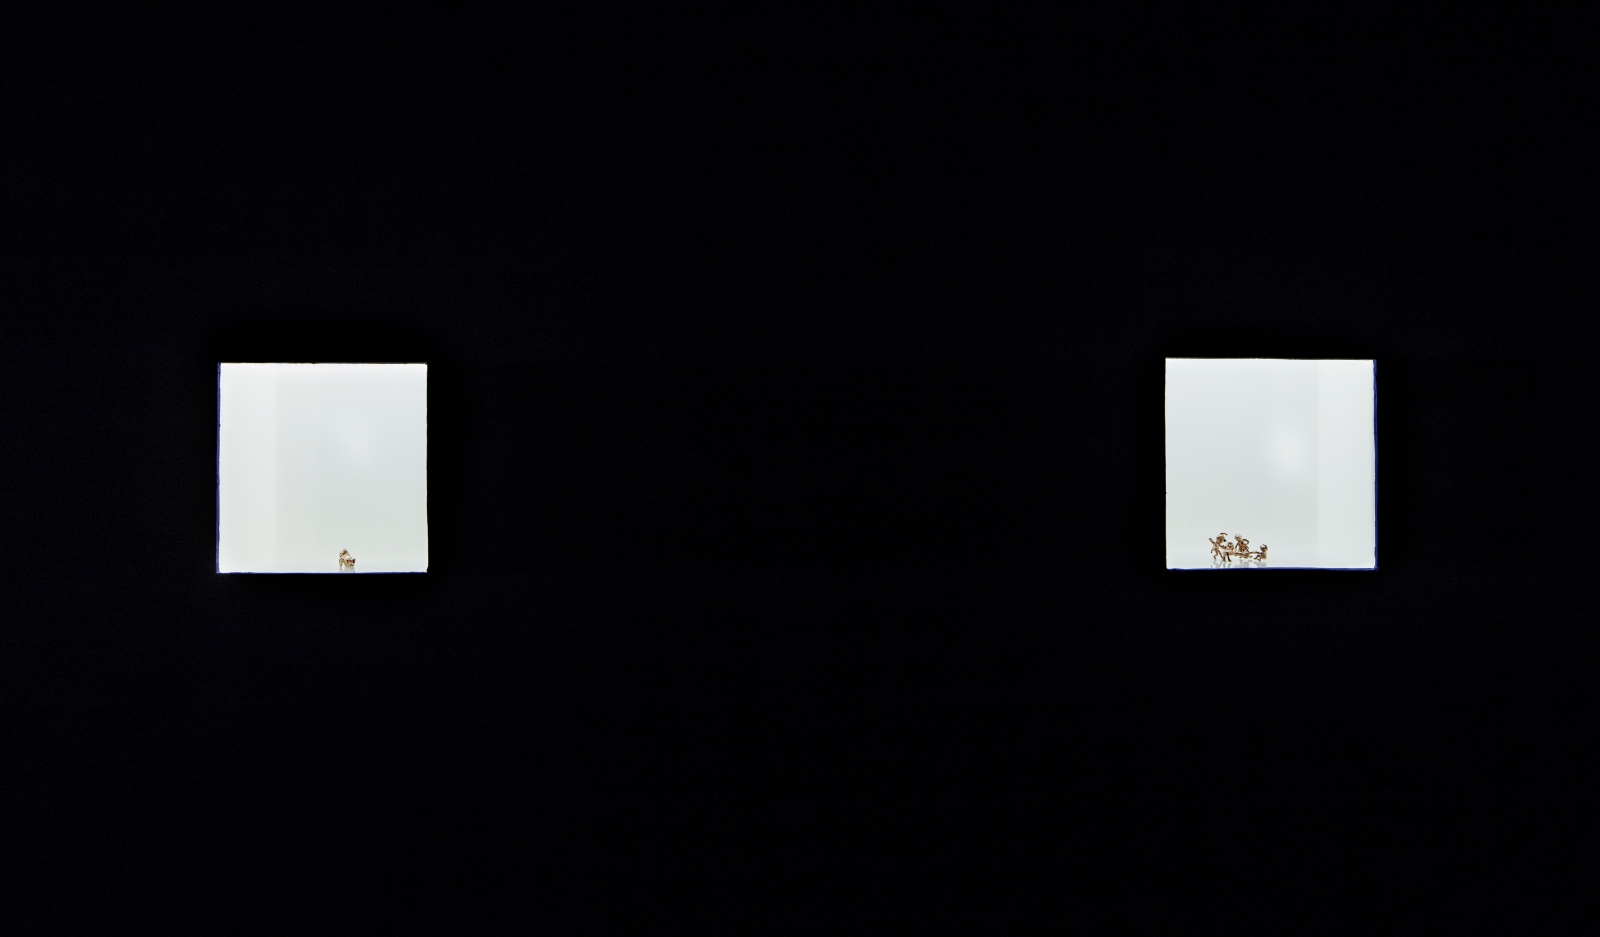 Carlos Motta
Towards a Homoerotic Historiography, 2014 (installation view)
tumbaga washed silver
dimensions variable&nbsp;